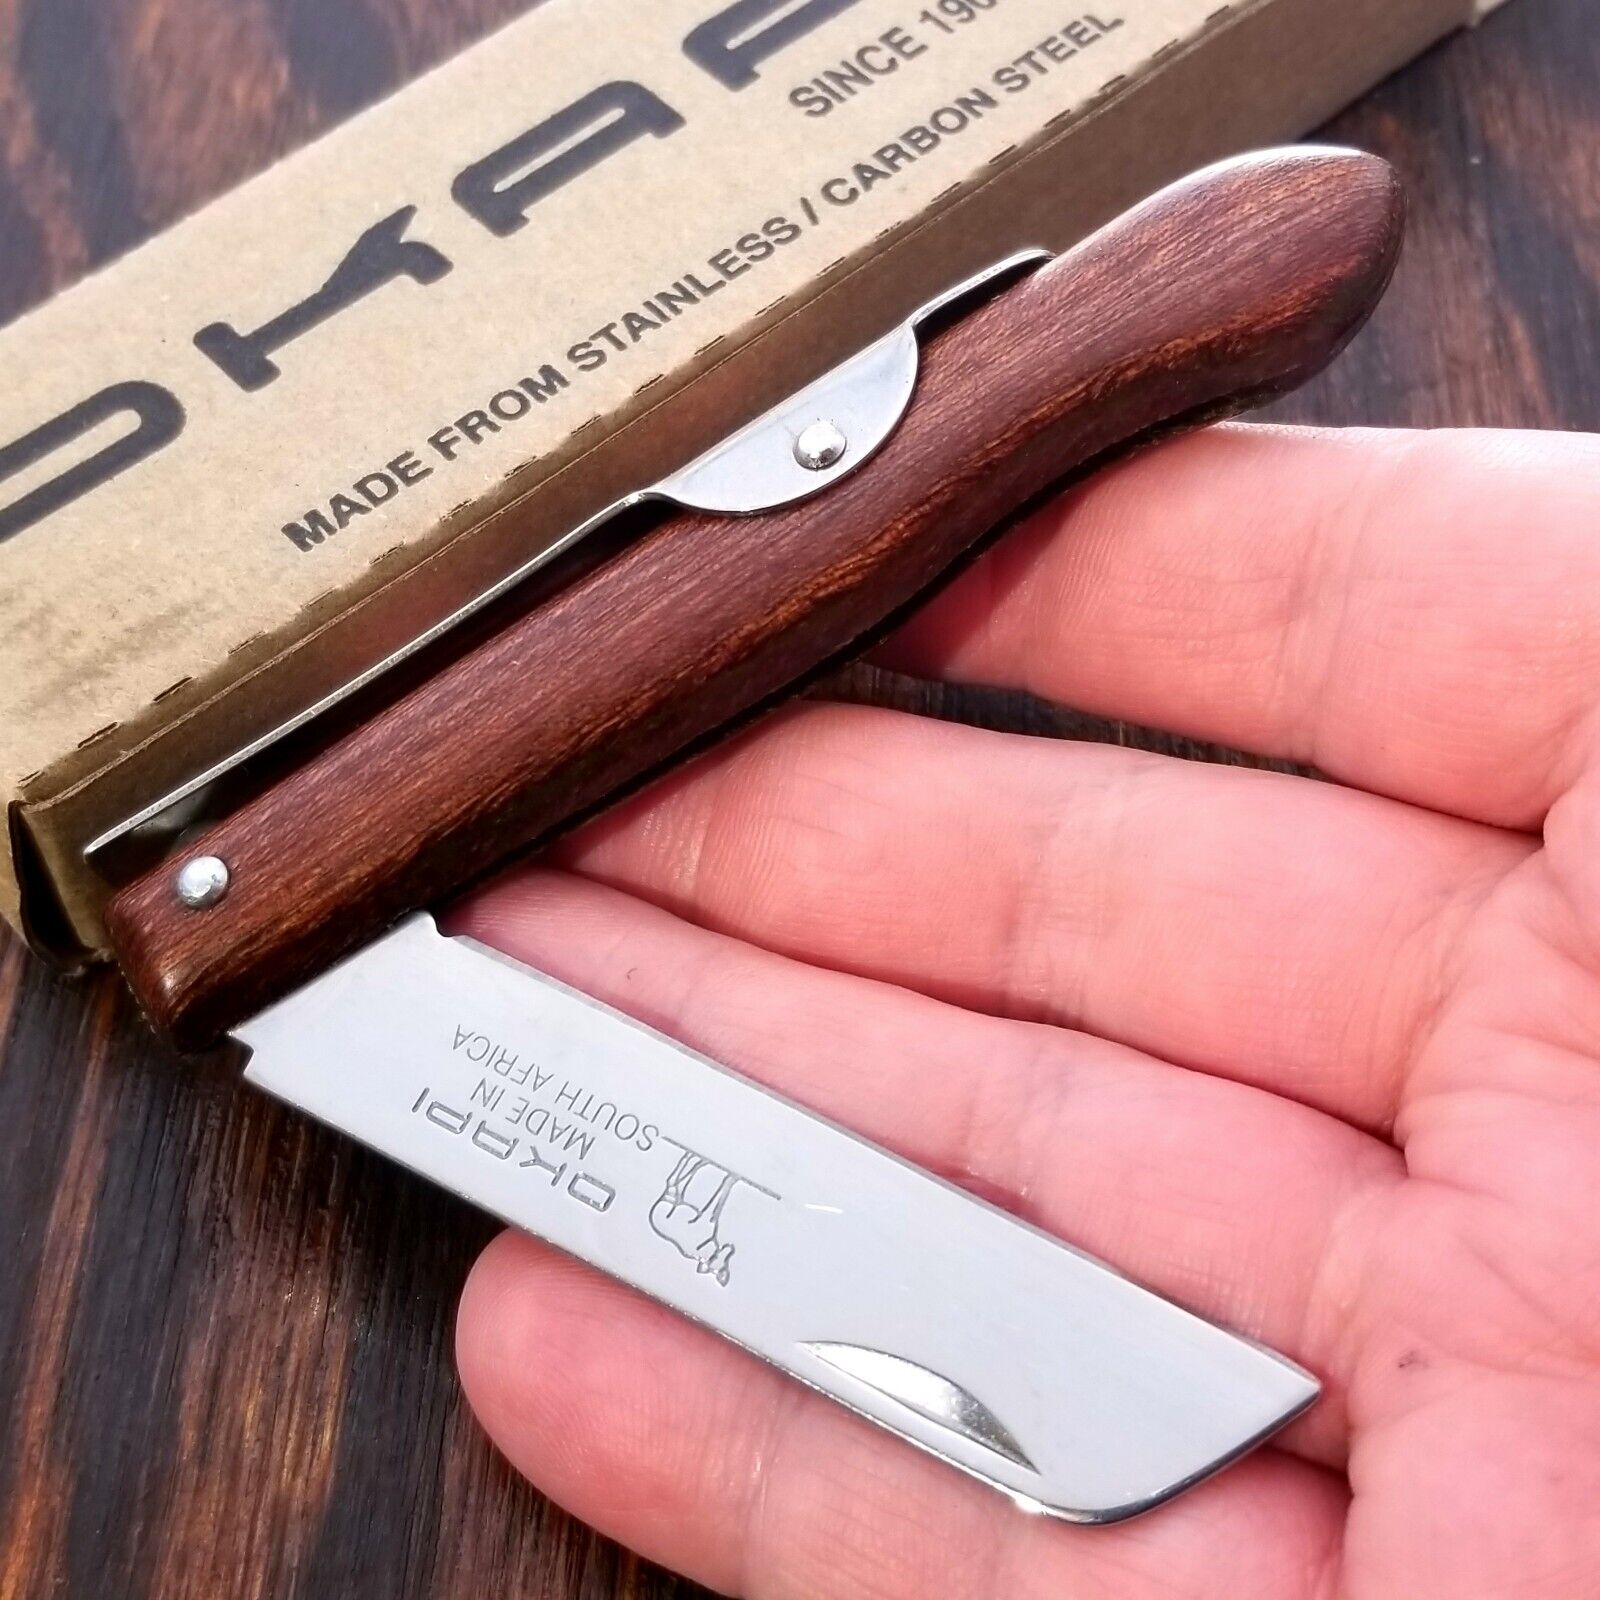 Okapi Biltong Sheepsfoot Blade Wood Handles Pocket Knife Made in South Africa